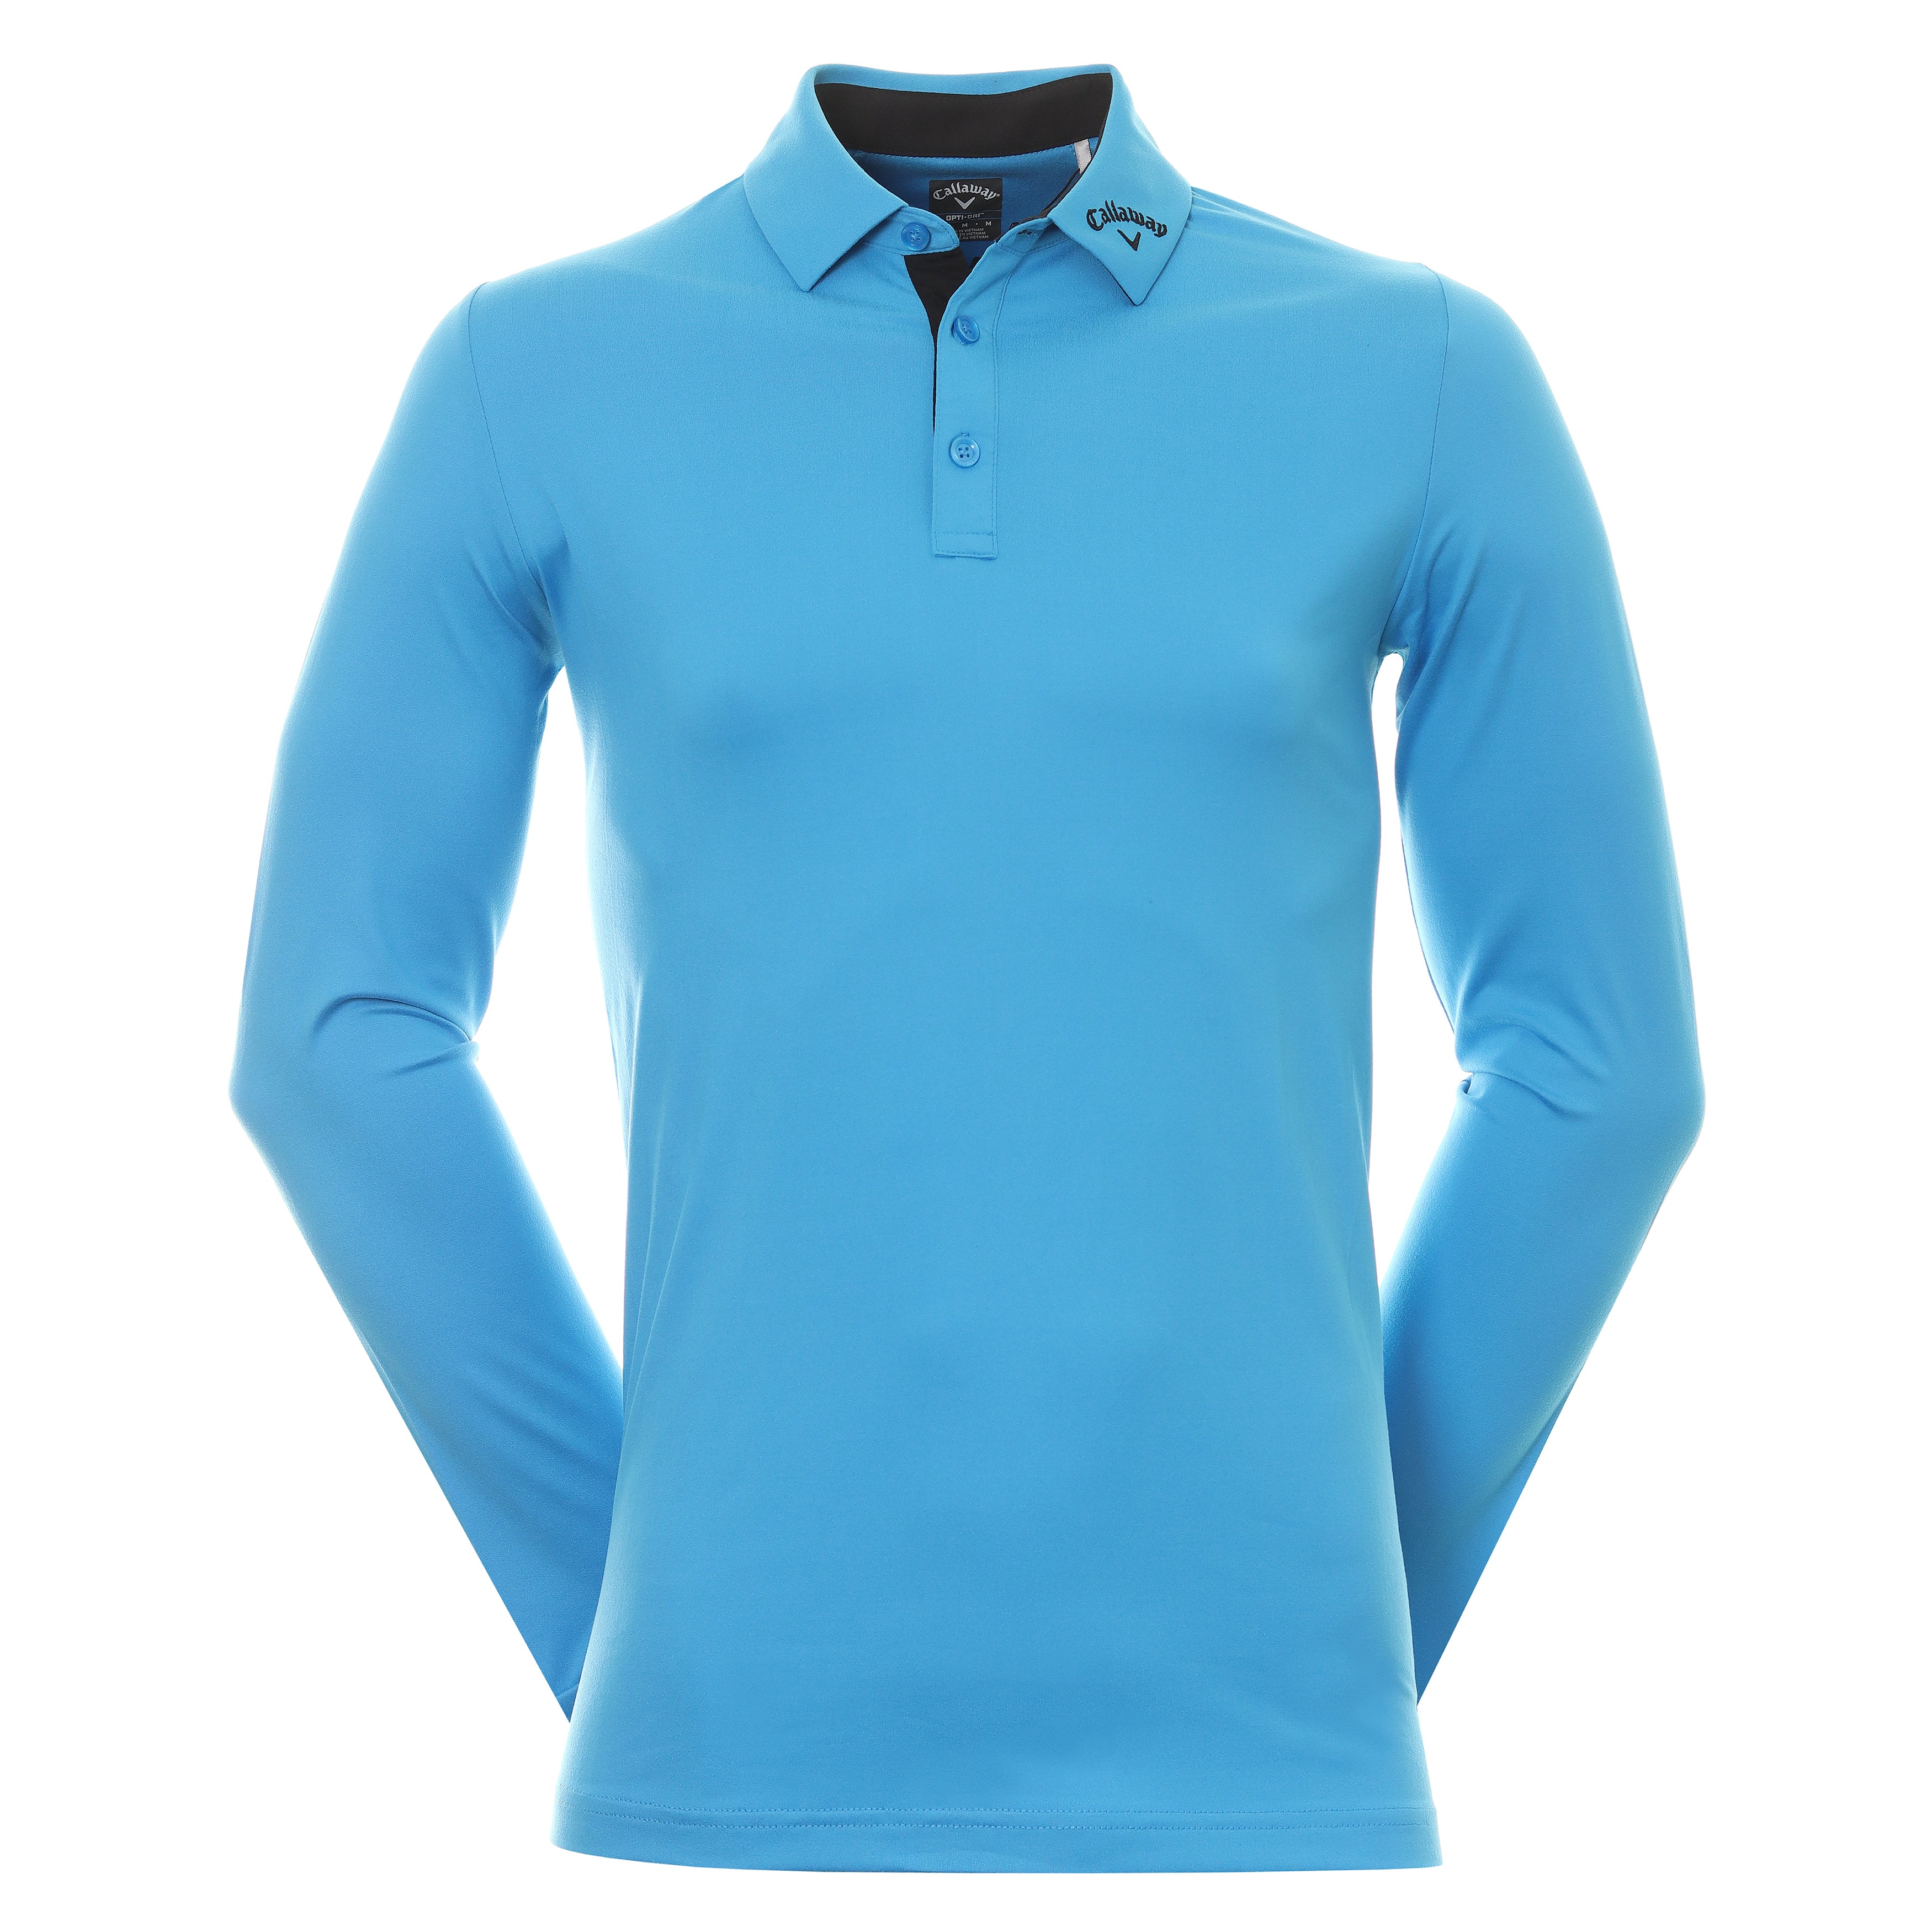 EPG Half Sleeve's Pure Cotton Men's Polo ( Collar) T shirt - Sky Blue color Medium (M) (38) / AZURE ( SKY BLUE )